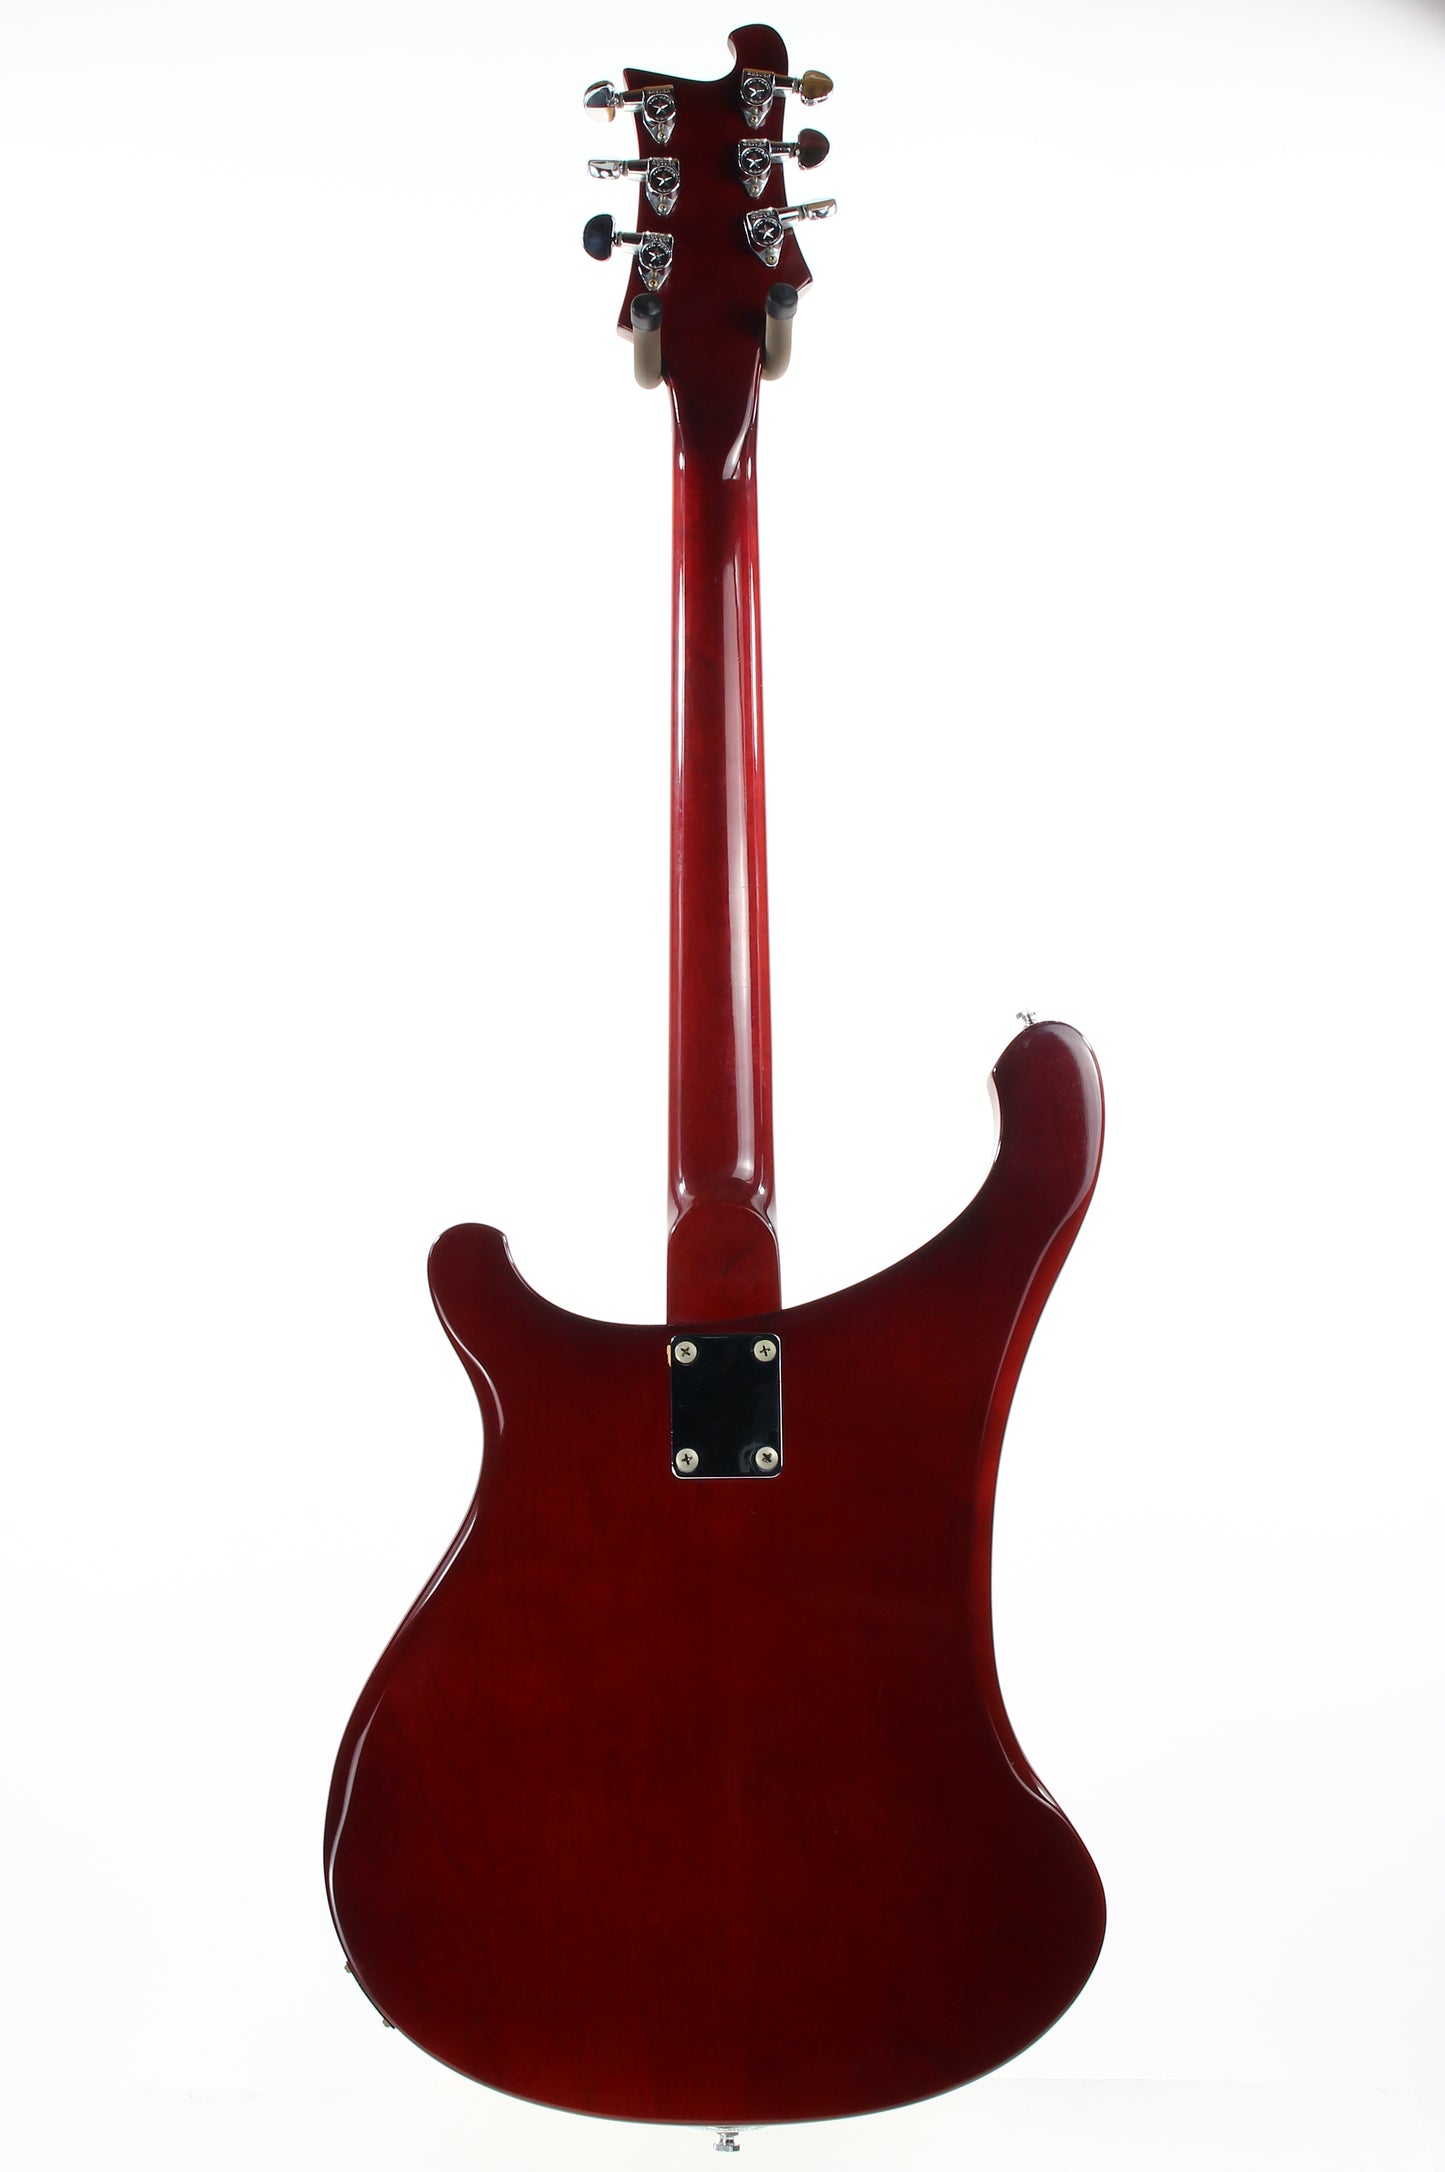 1982 Rickenbacker 481 Slant Fret BURGUNDYGLO - Clean, Original Case, Keys, 480 4001 6-String Guitar